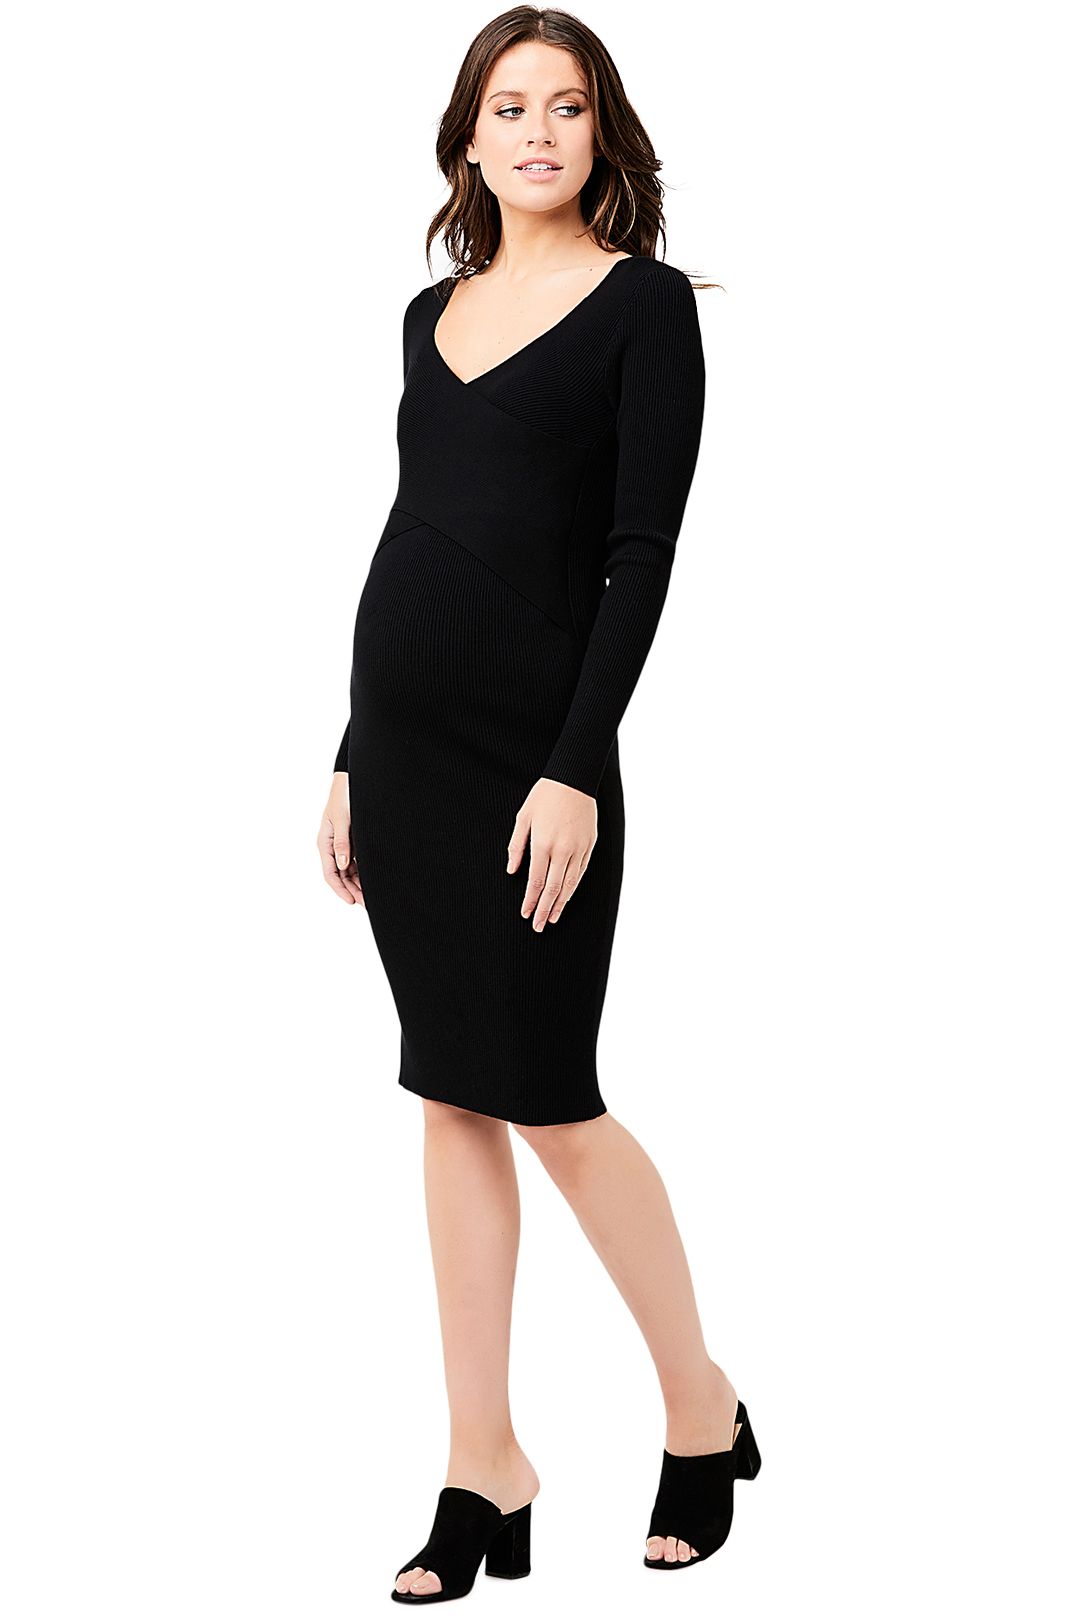 Ripe-Maternity-Sadie-Rib-Knit-Nursing-Dress-Black-front